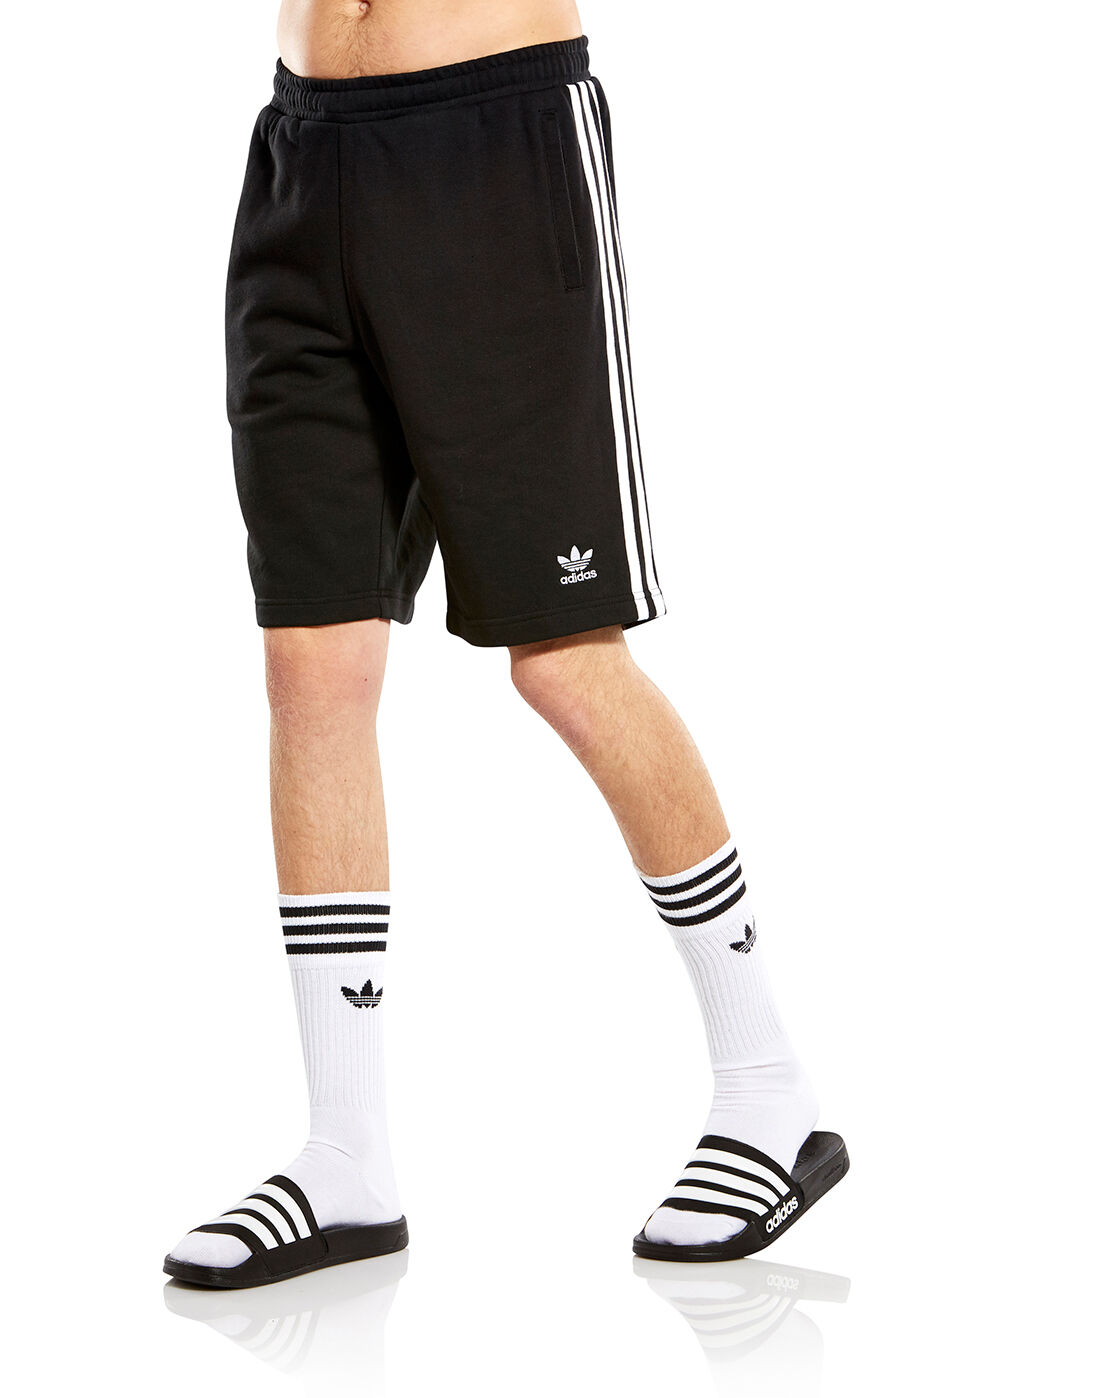 adidas 3 stripe shorts men's